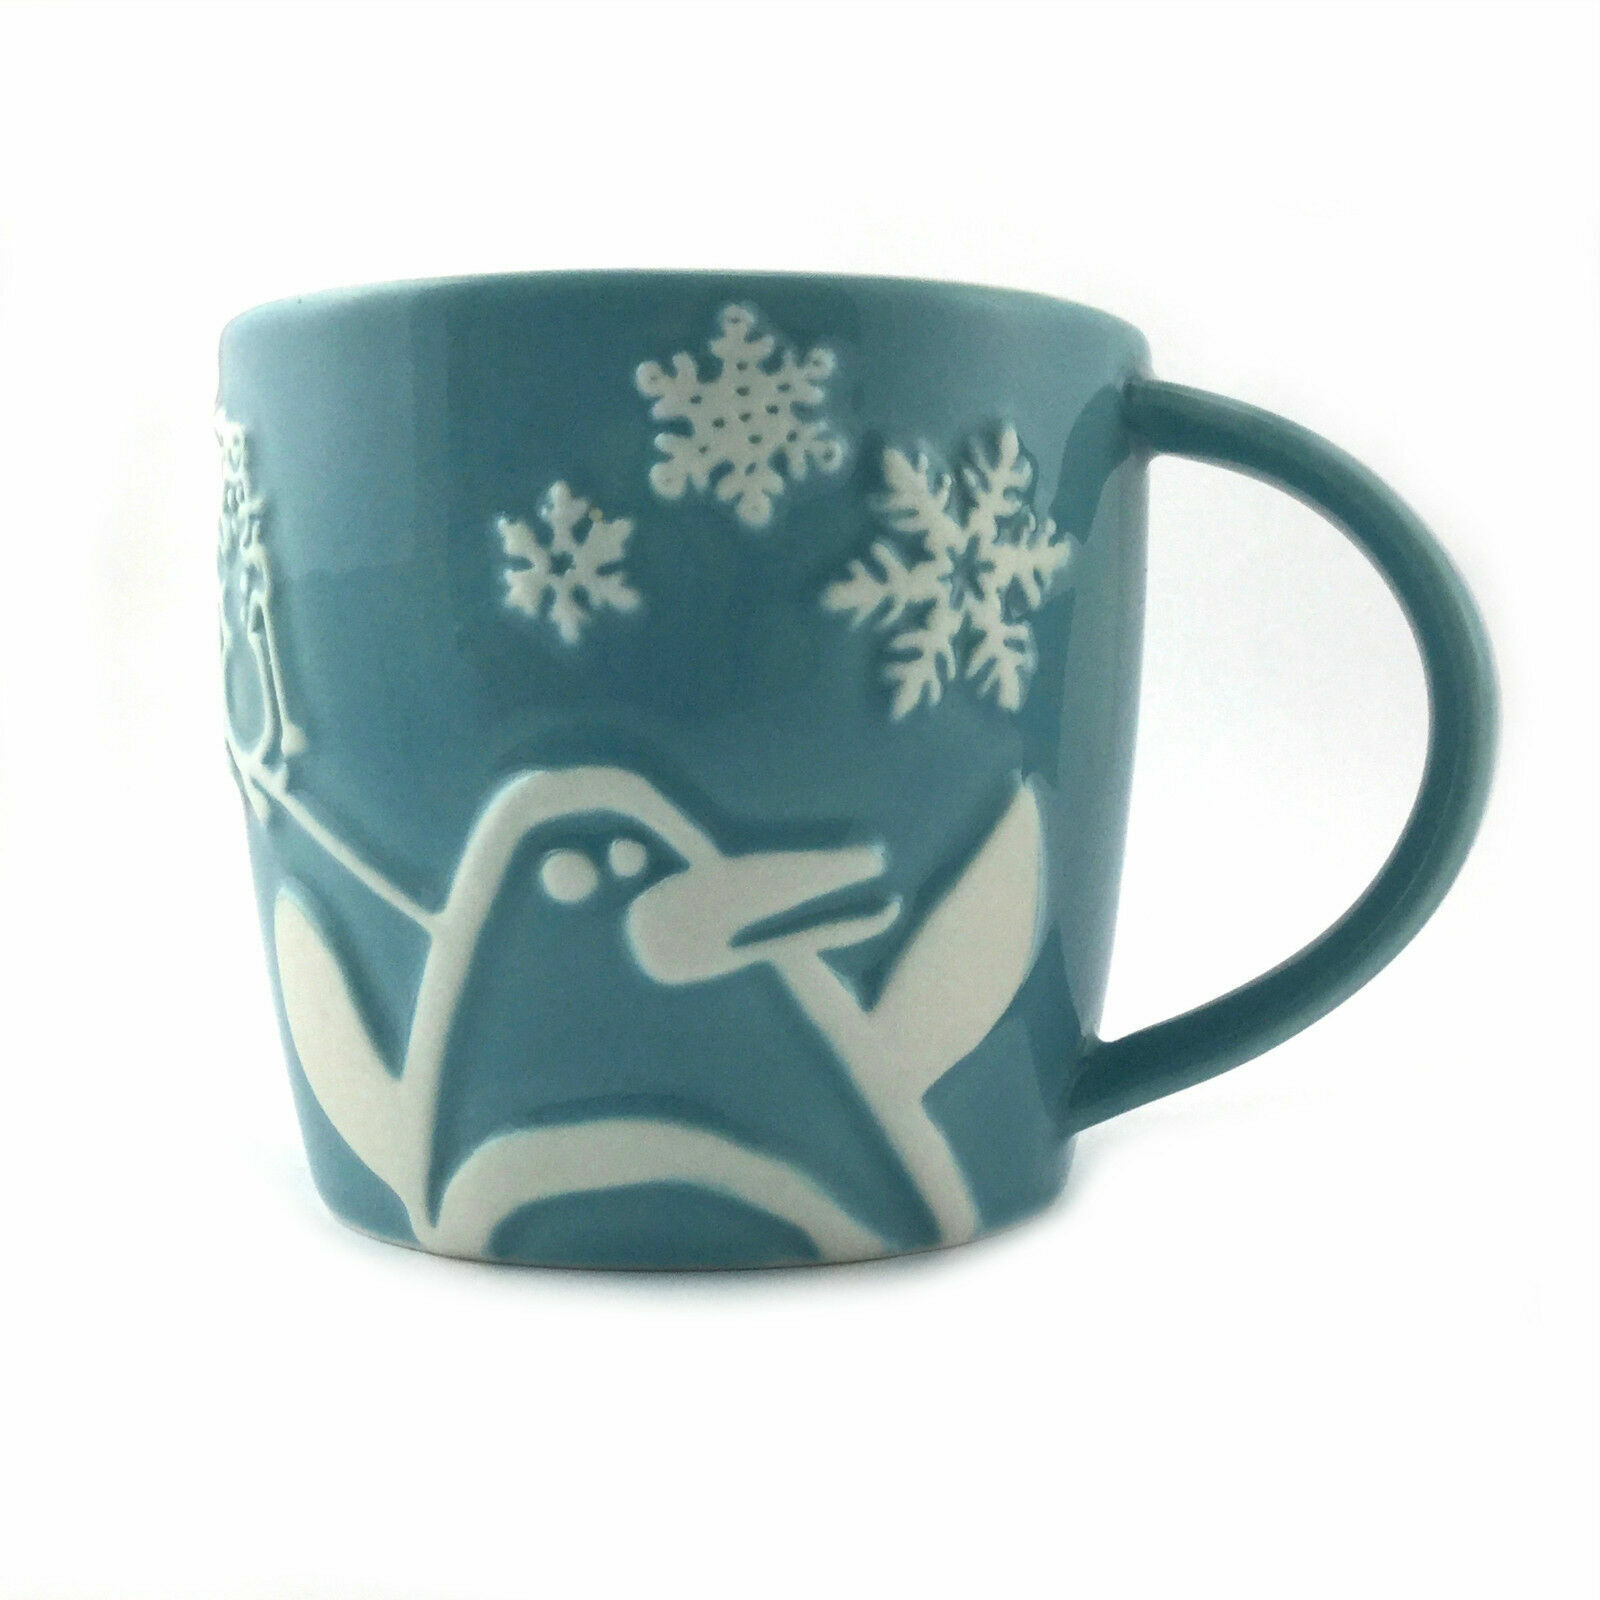 VTG Starbucks Blue Coffee Holiday Mug Penguin Snowman Snowflakes Cup 8 oz